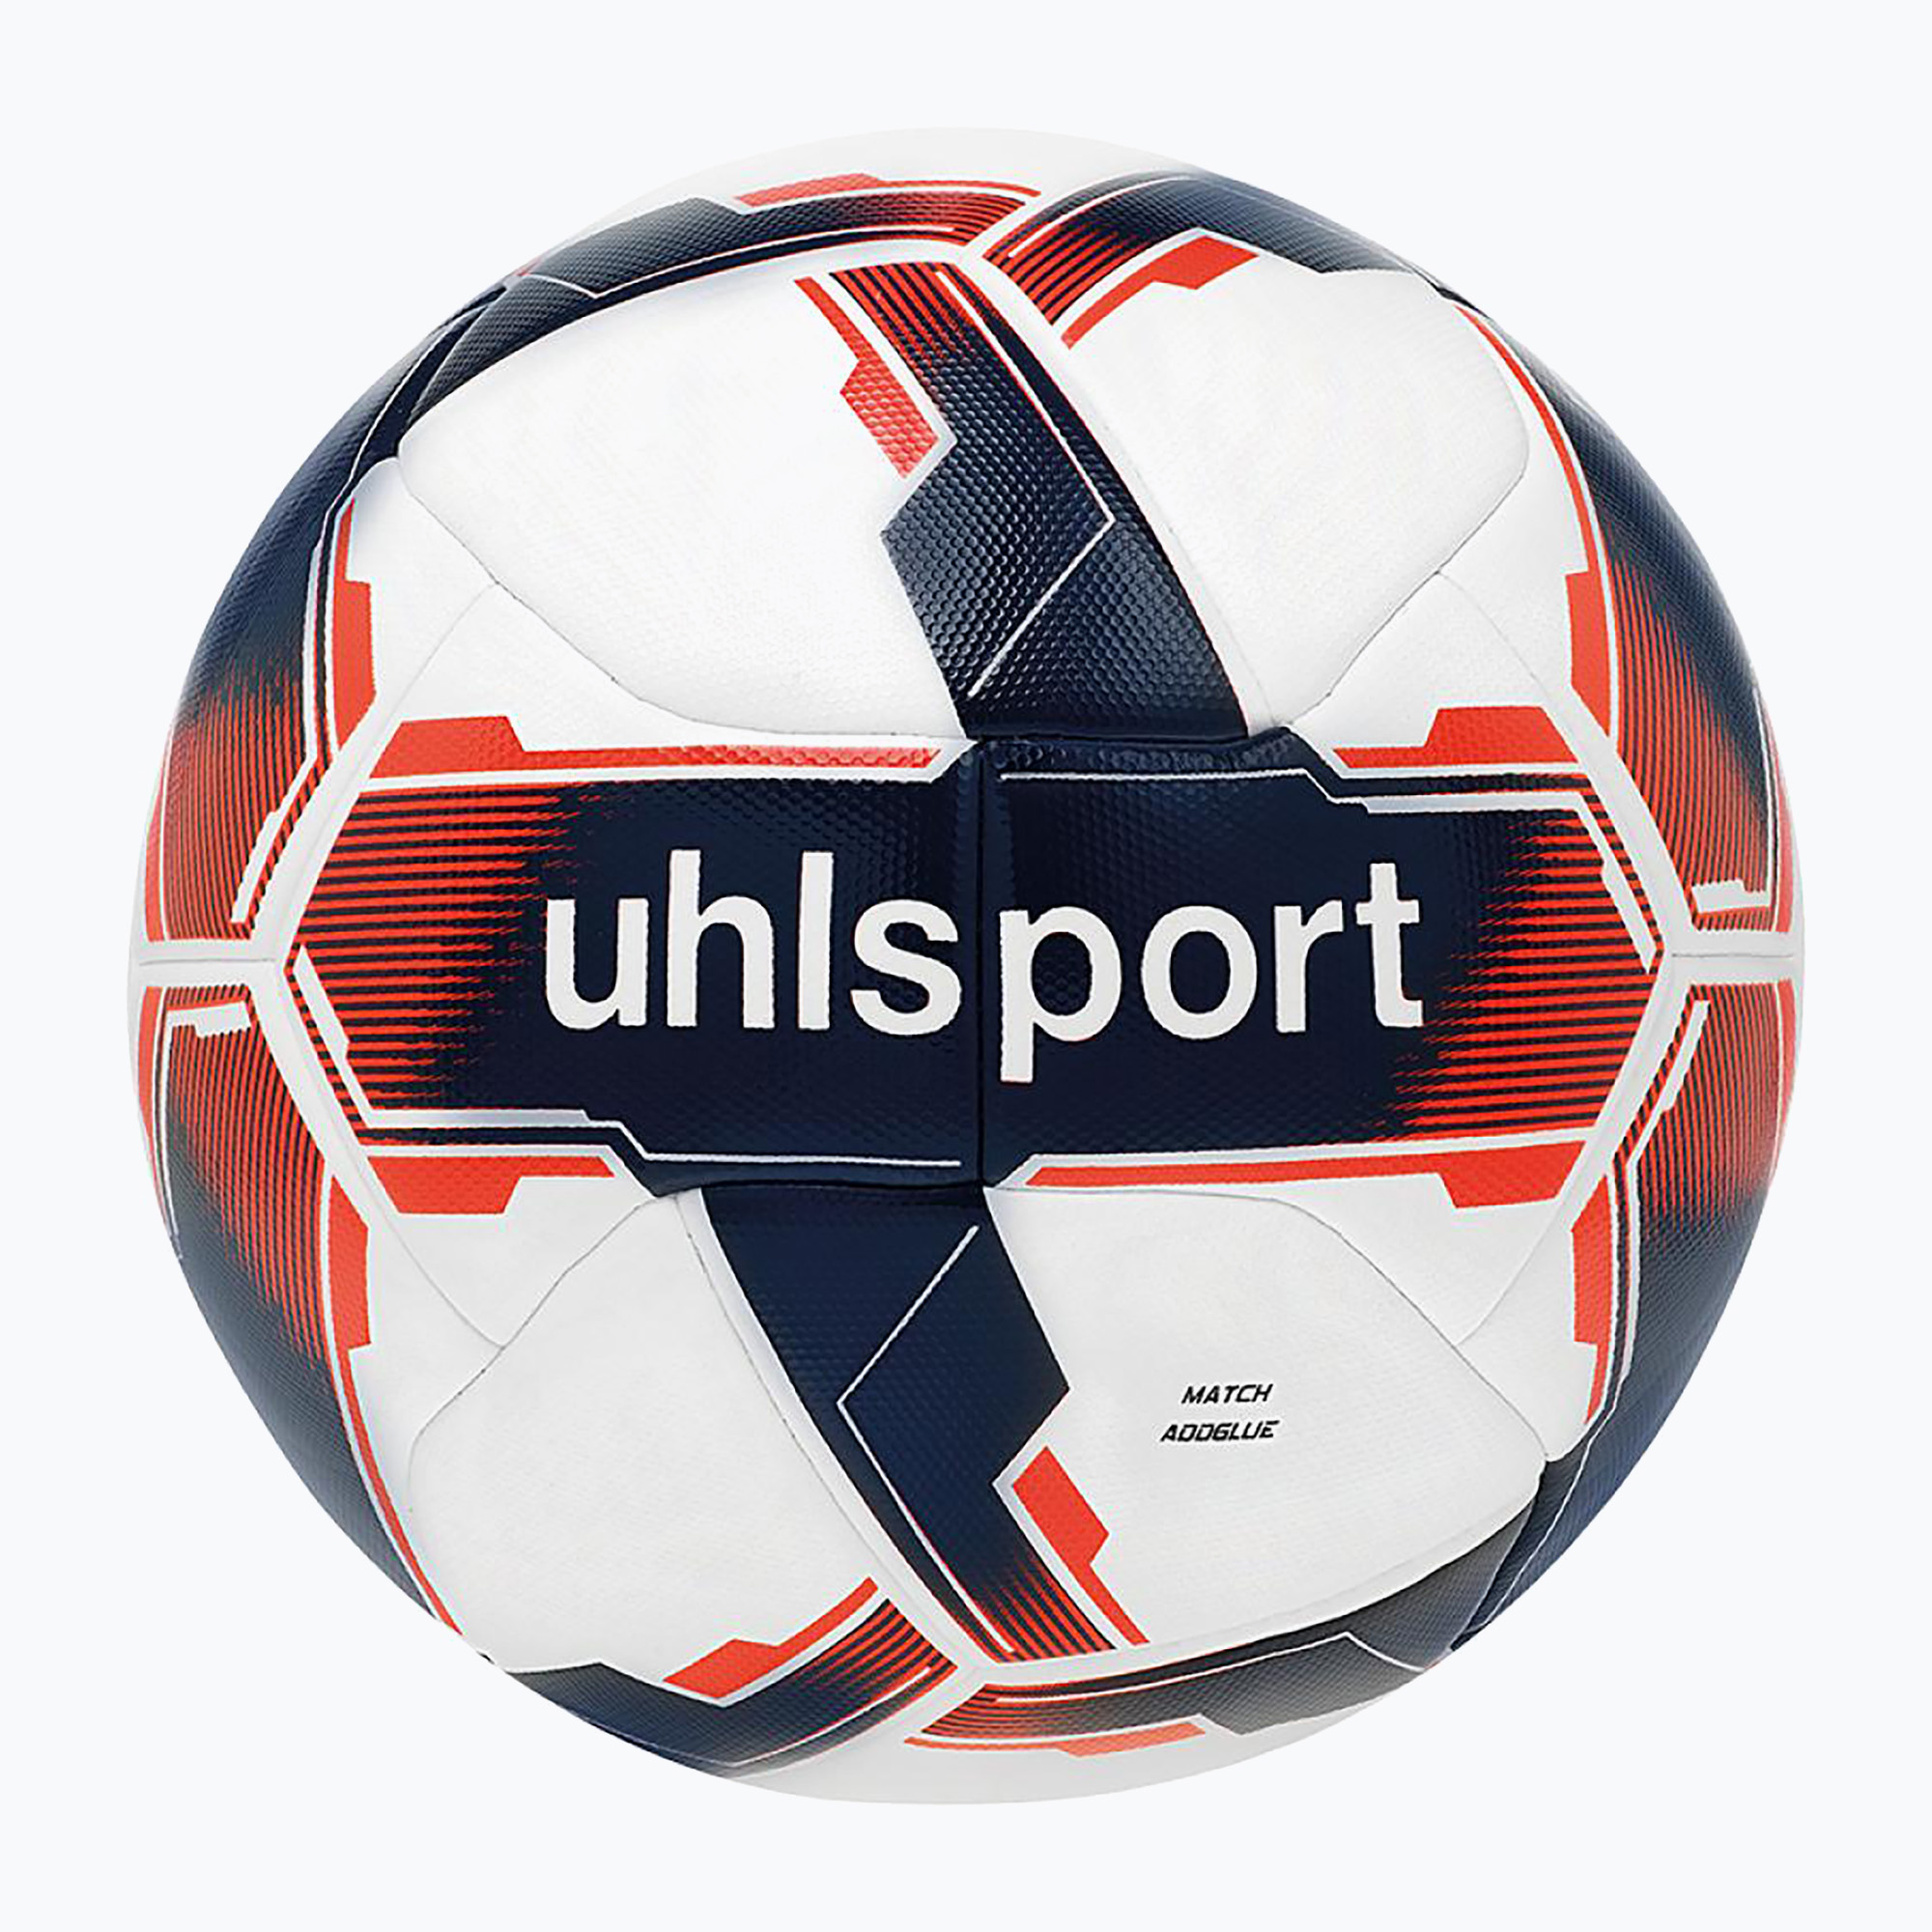 Minge de fotbal  uhlsport Match Addglue white/navy/fluo red rozmiar 5